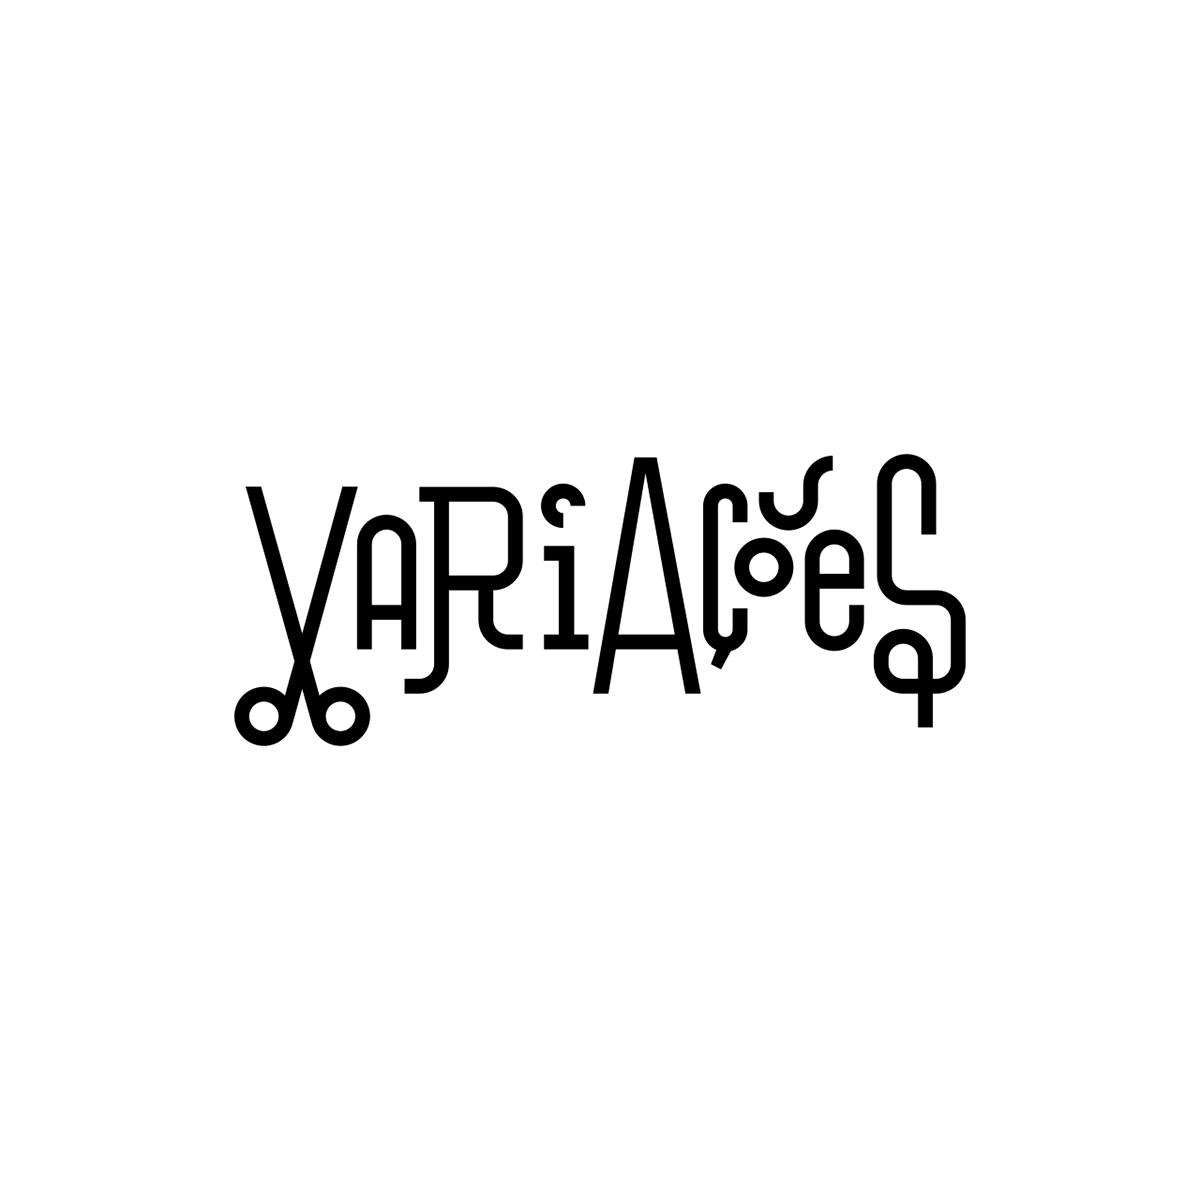 silas type letters bespoke portuguese Portugal bifana Custom lettering custom type